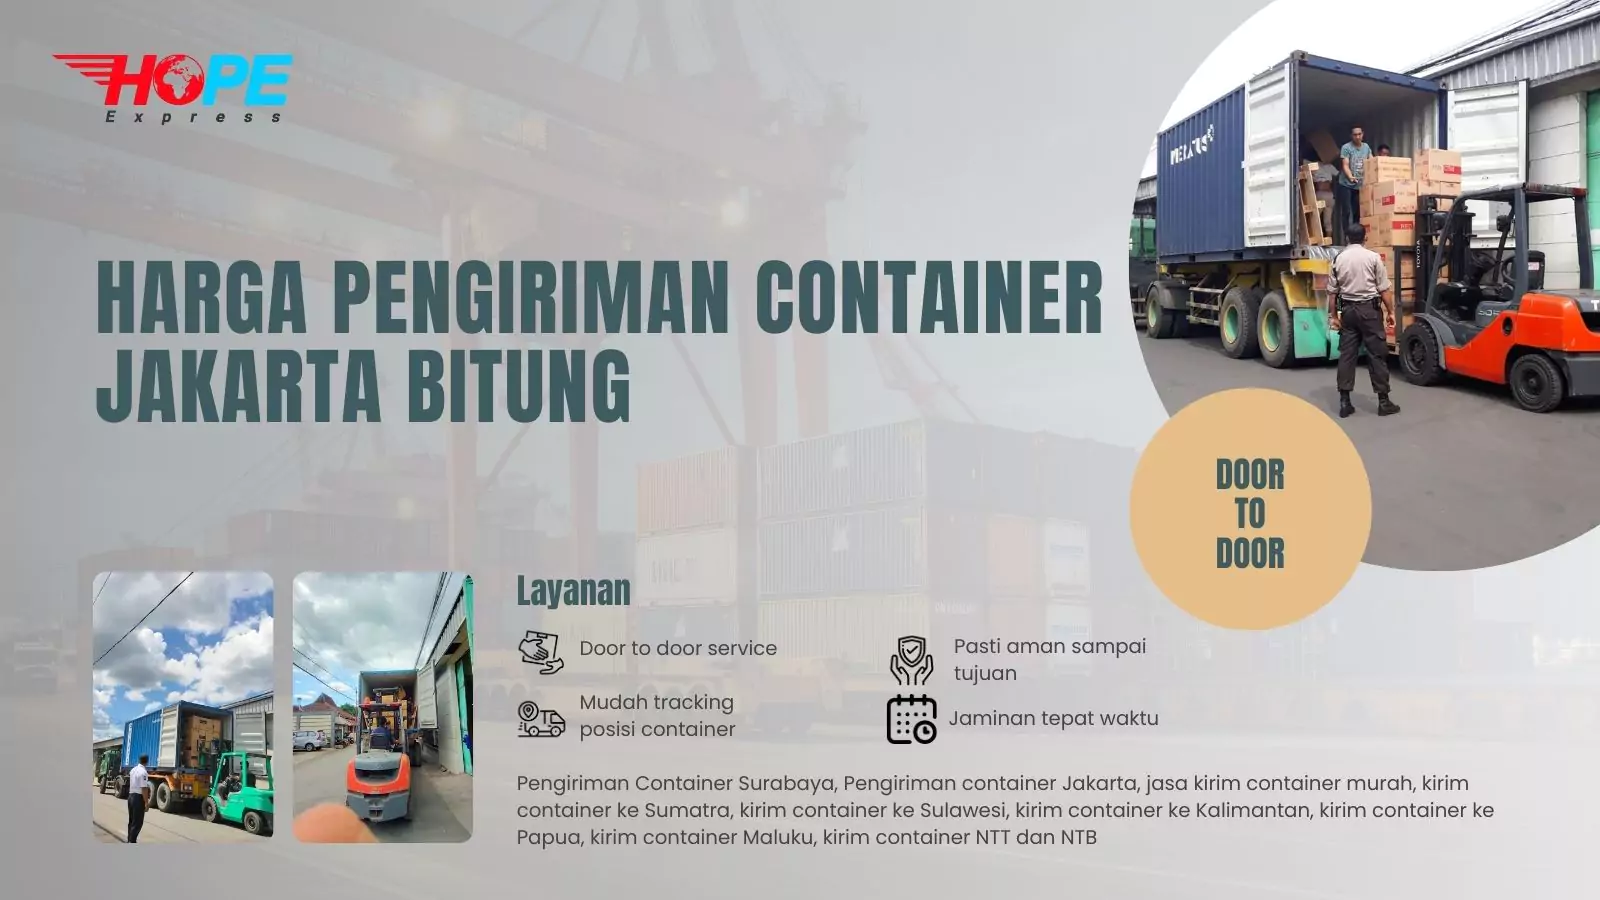 Harga Pengiriman Container Jakarta Bitung